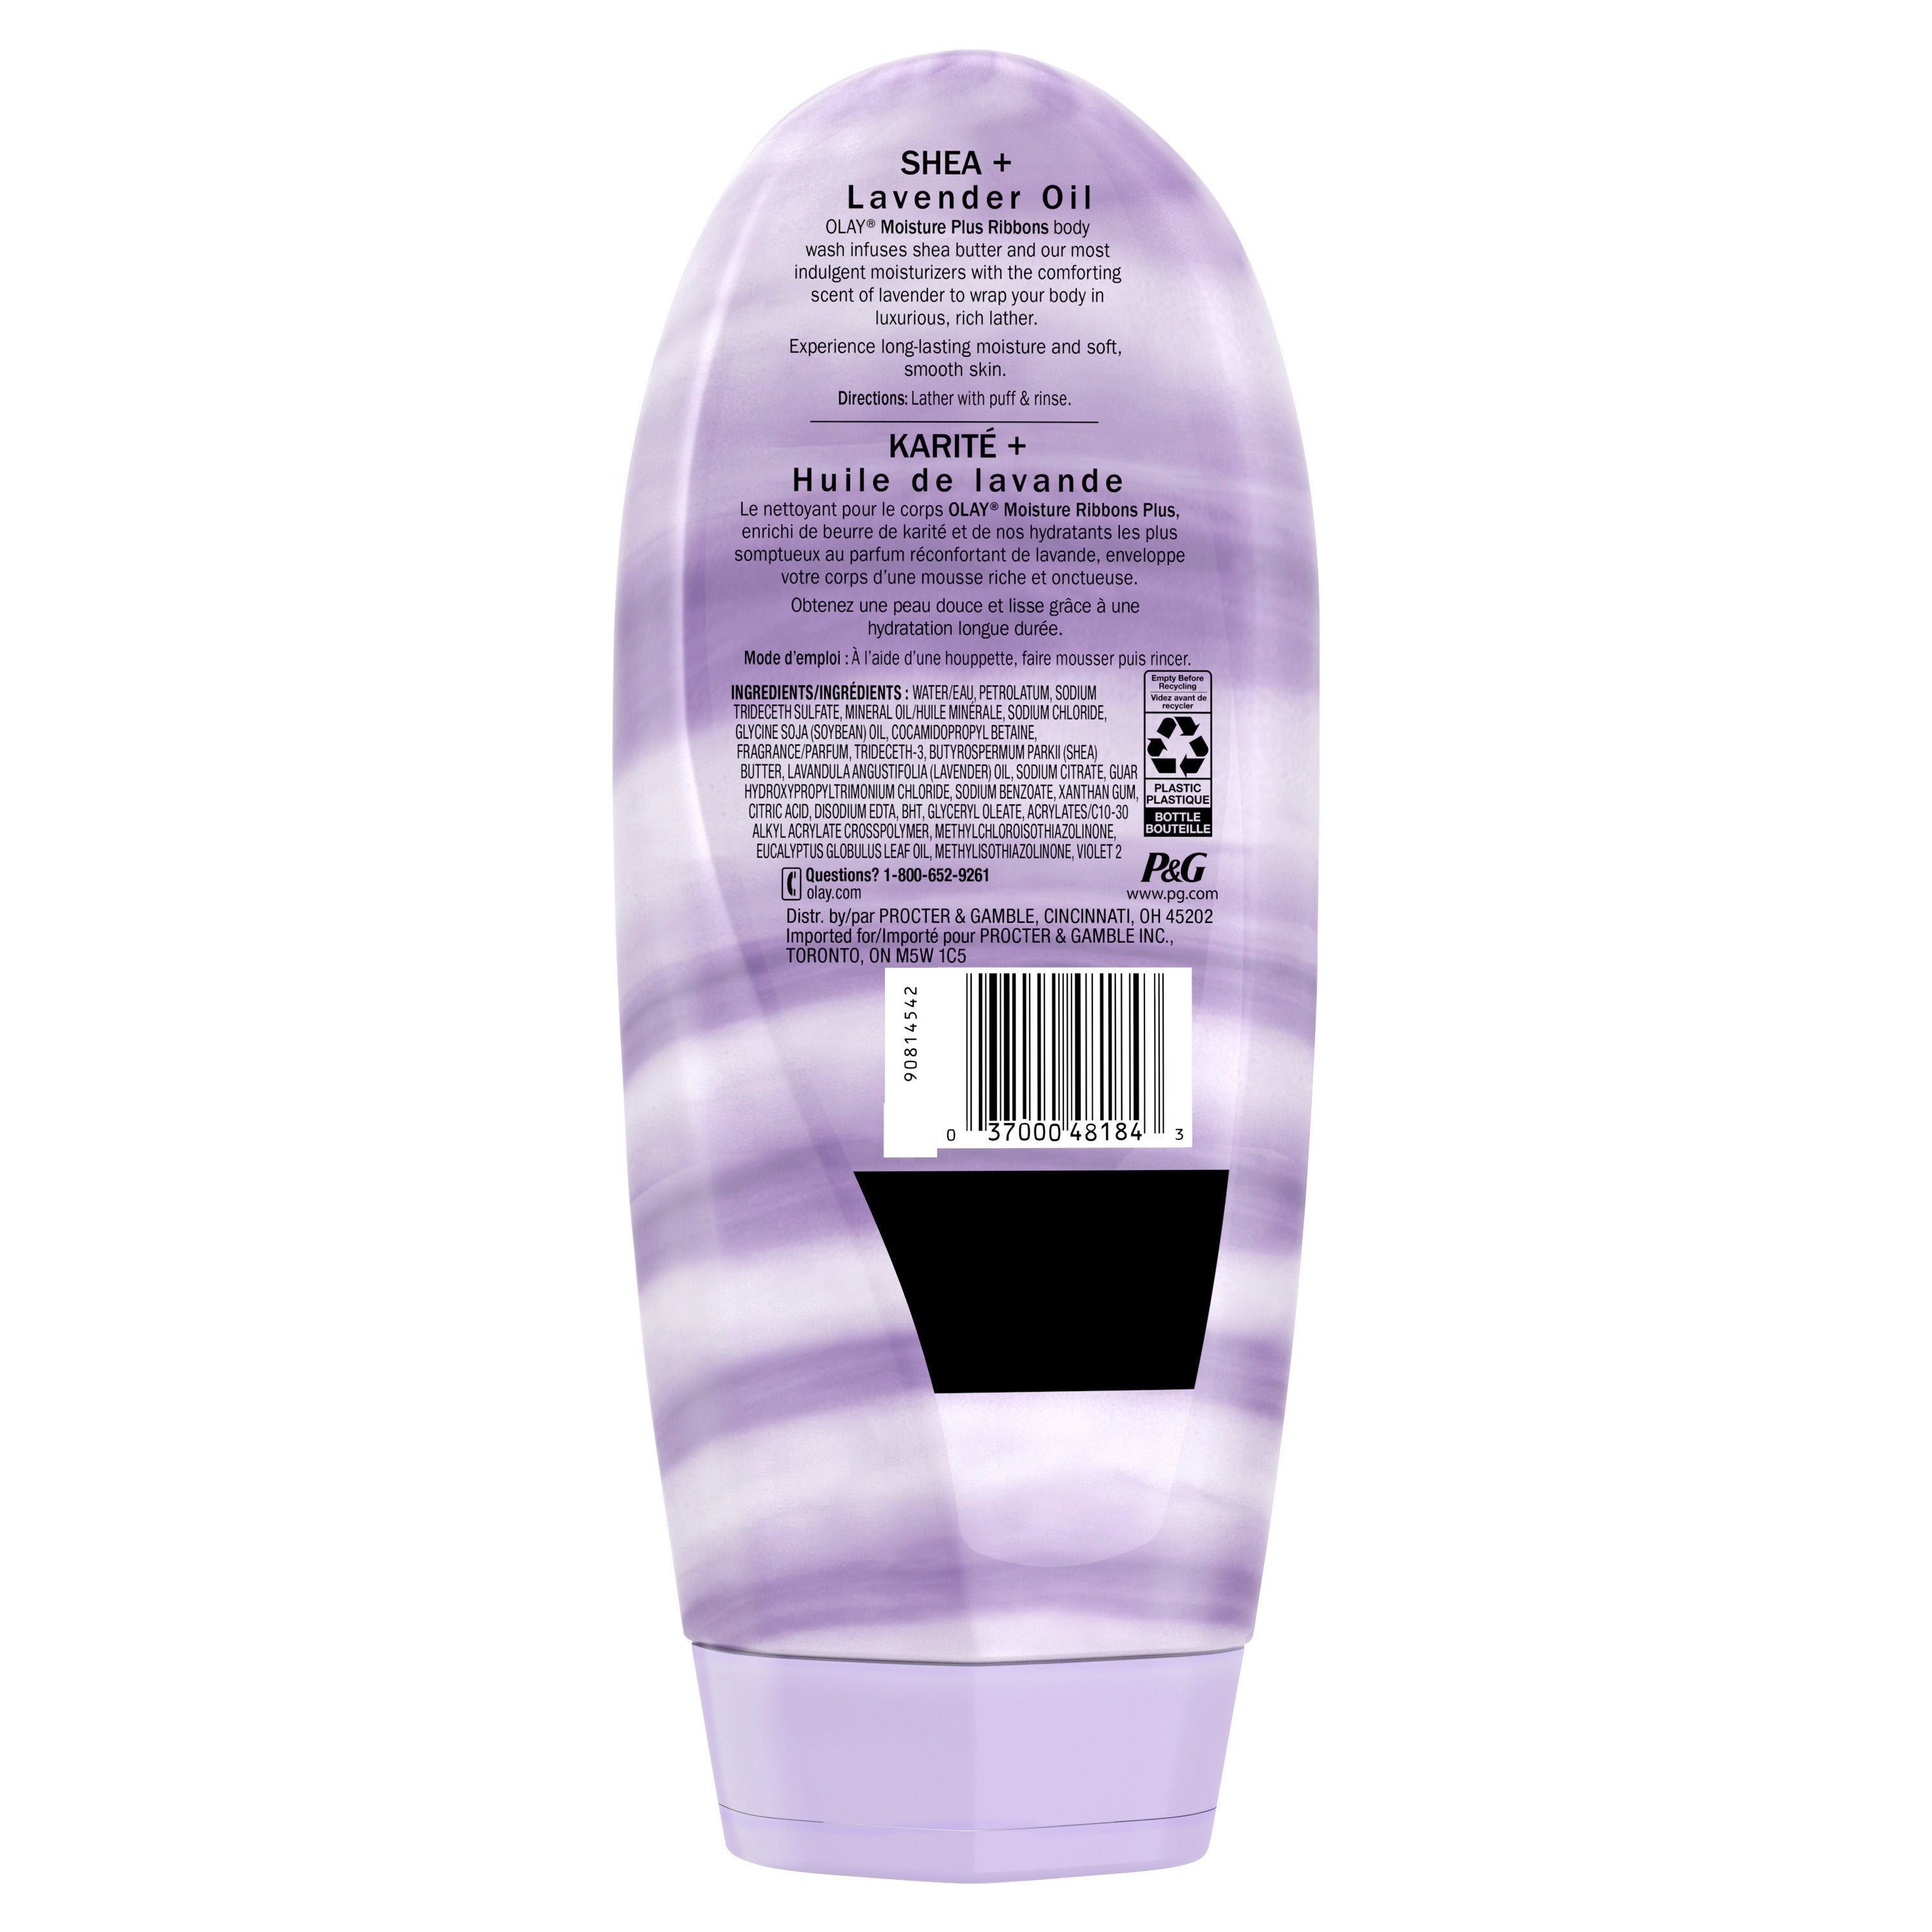 Olay Moisture Ribbons Plus Shea + Lavender Oil Body Wash, for All Skin Types, 18 fl oz | MTTS300